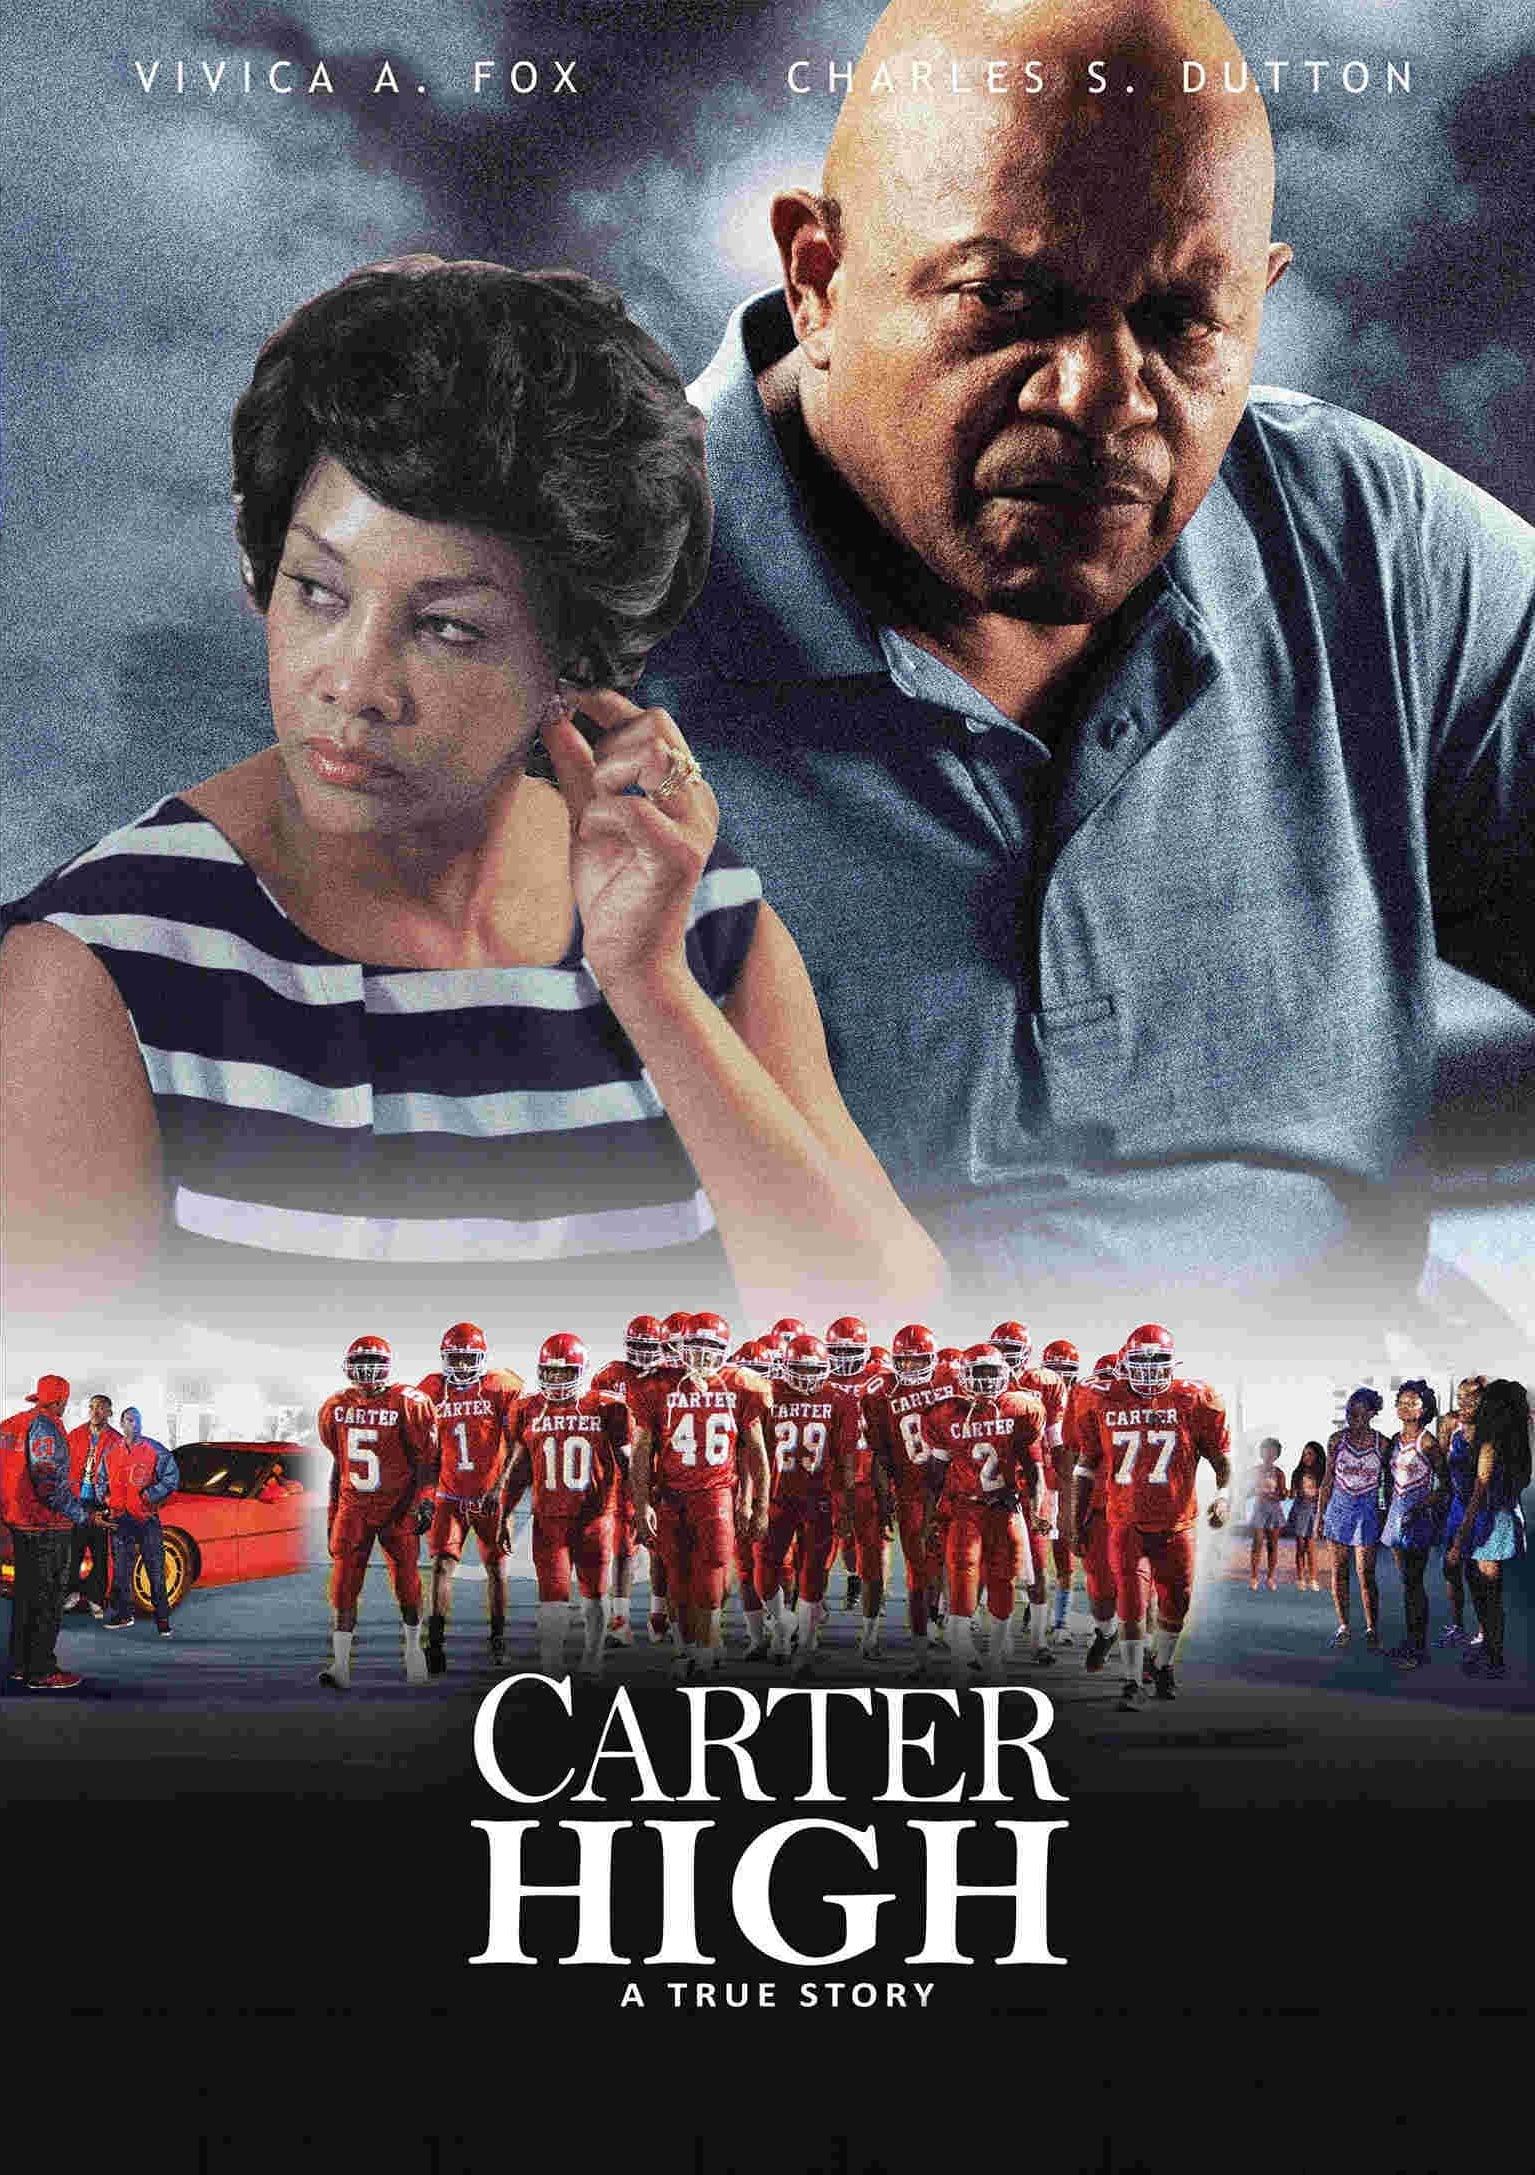 Carter High poster